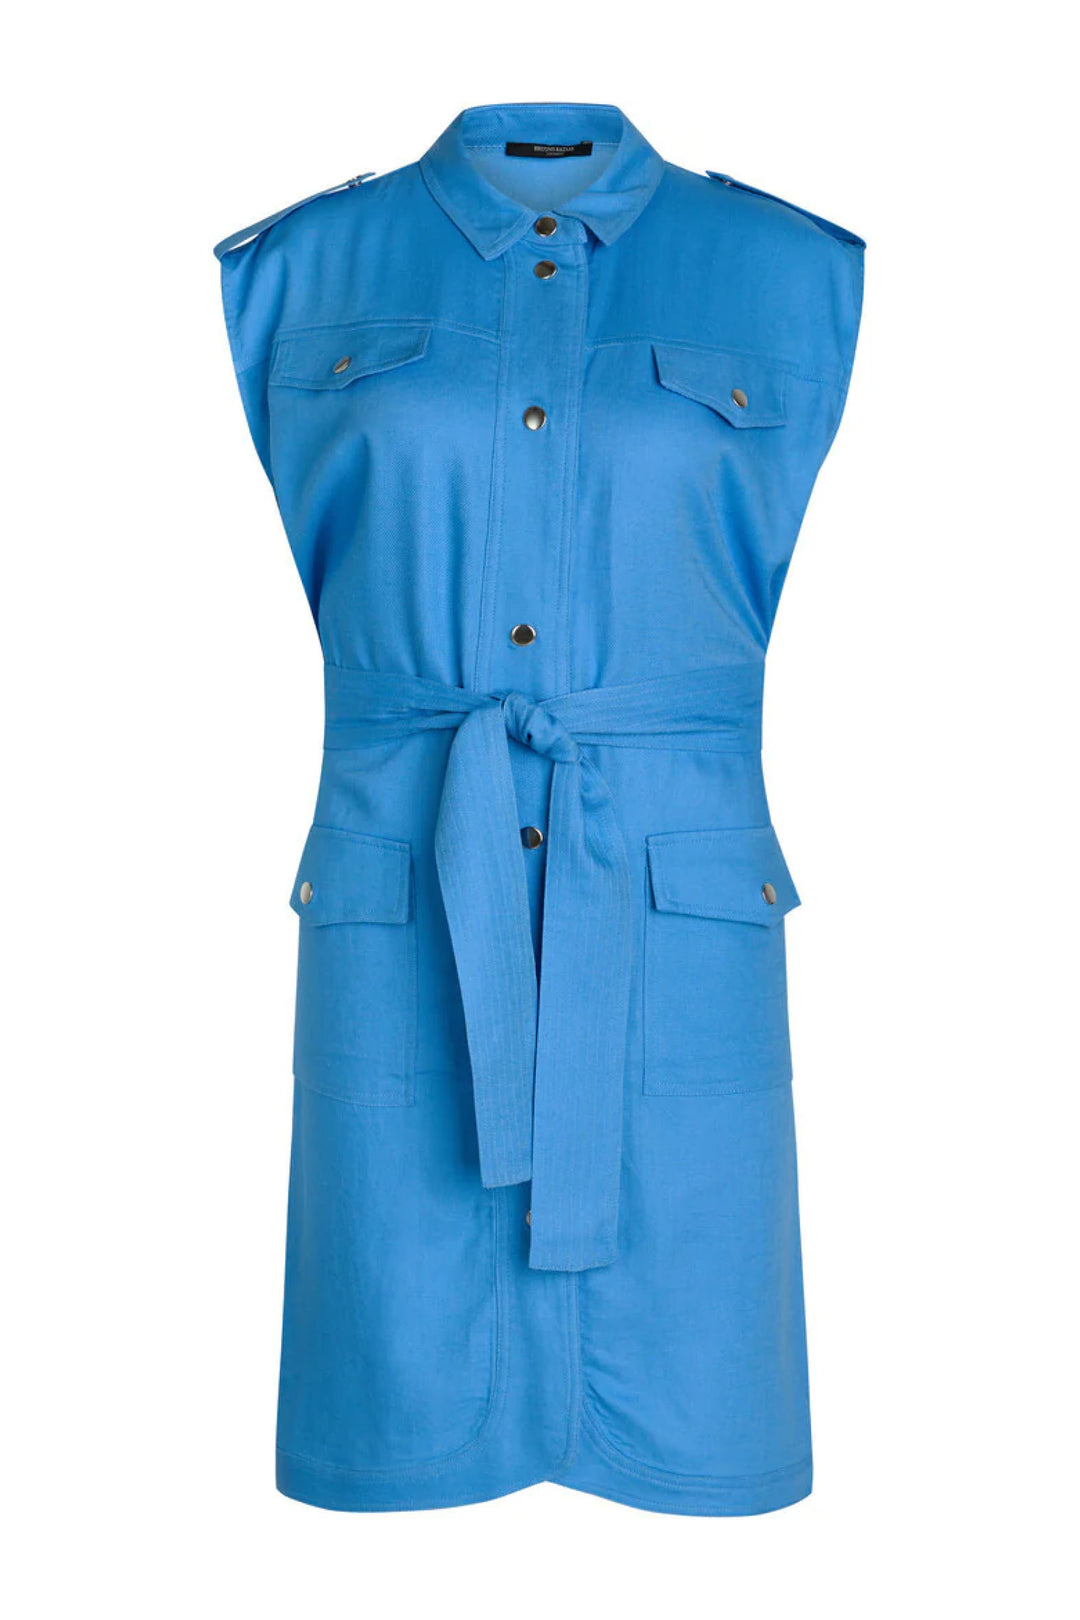 Bruuns Bazaar Women OxalisBBBia dress Dress Azure Blue